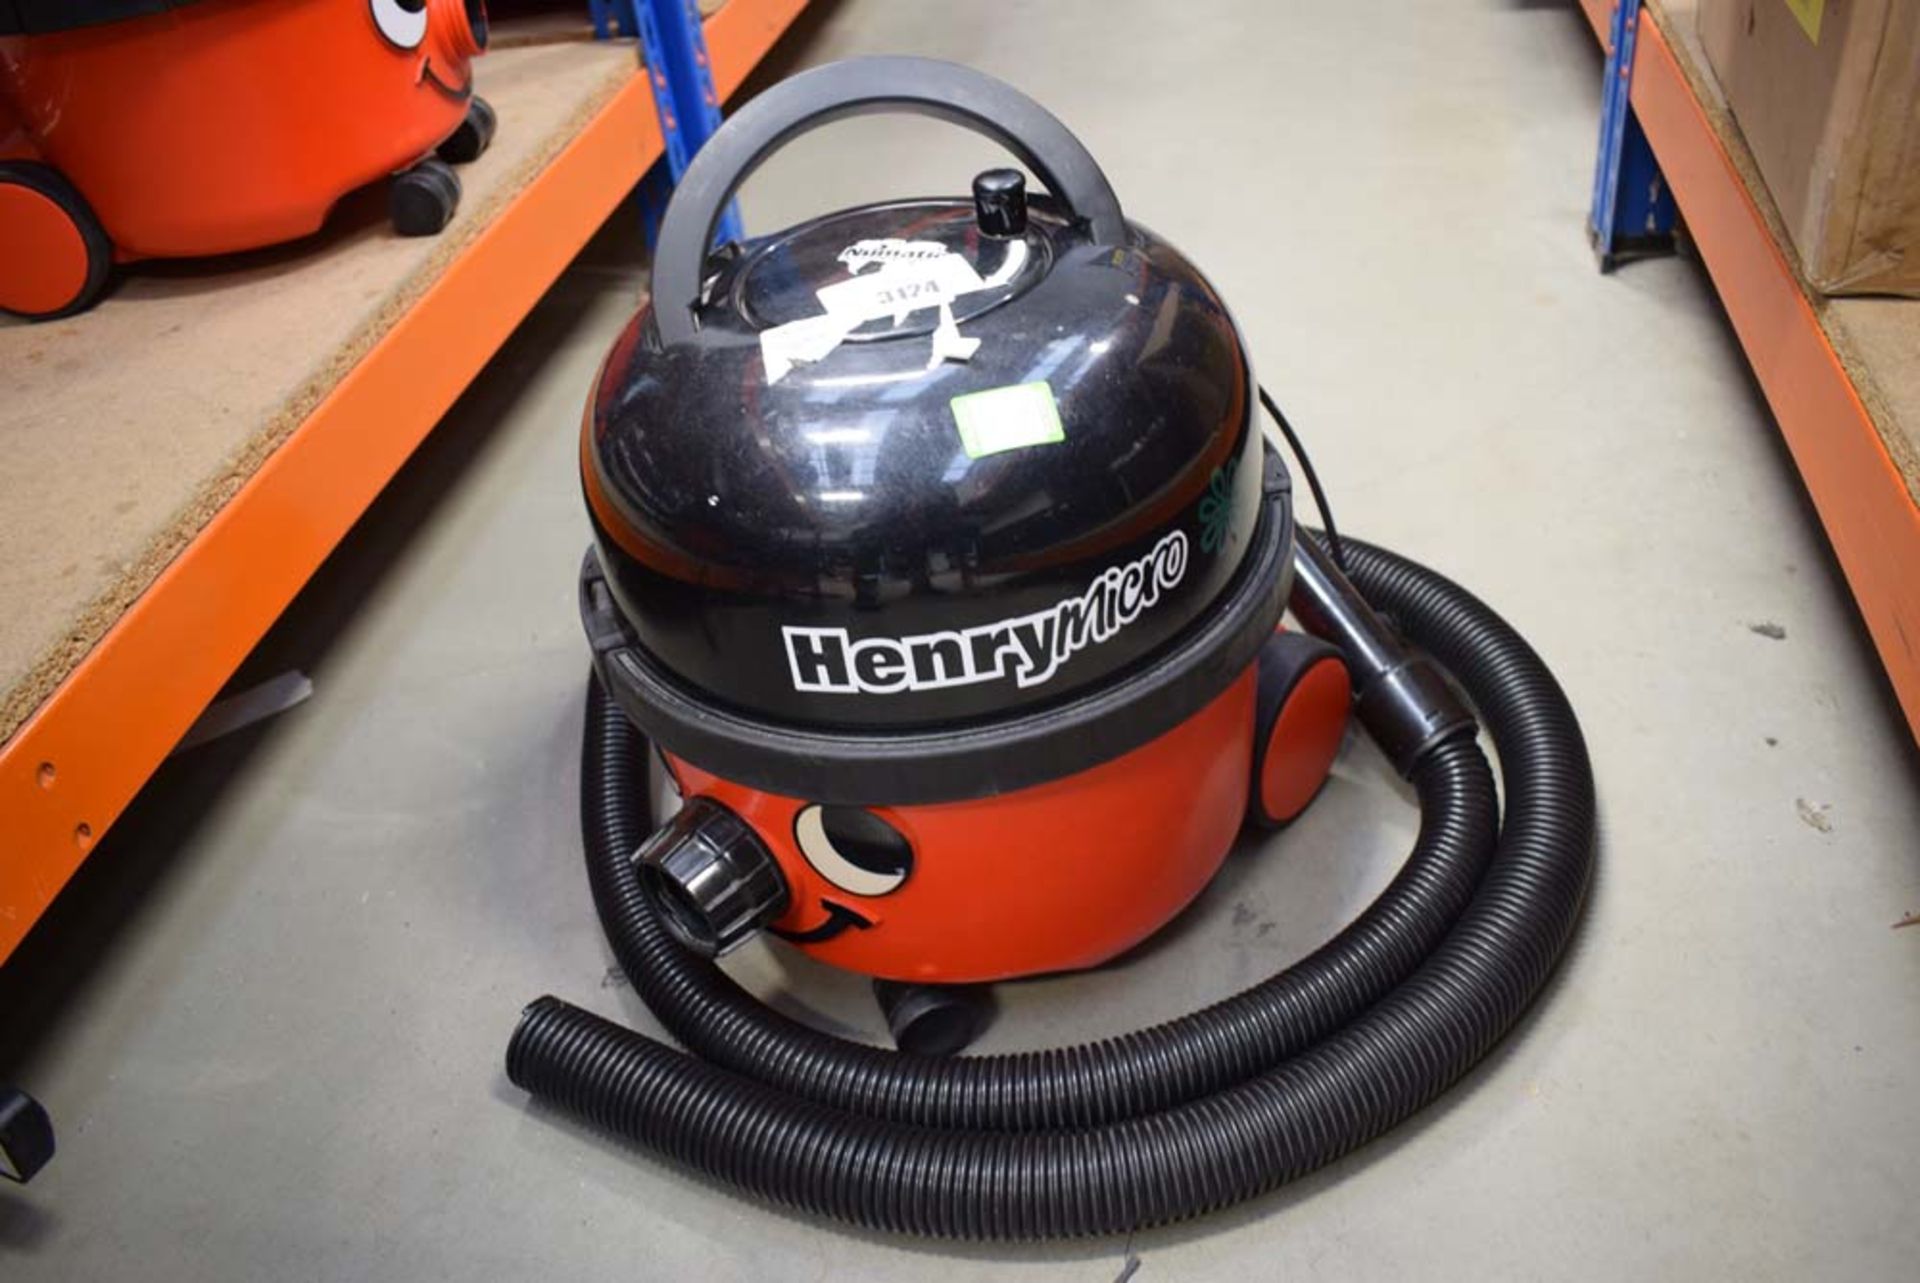 Henry micro vacuum cleaner plus pole